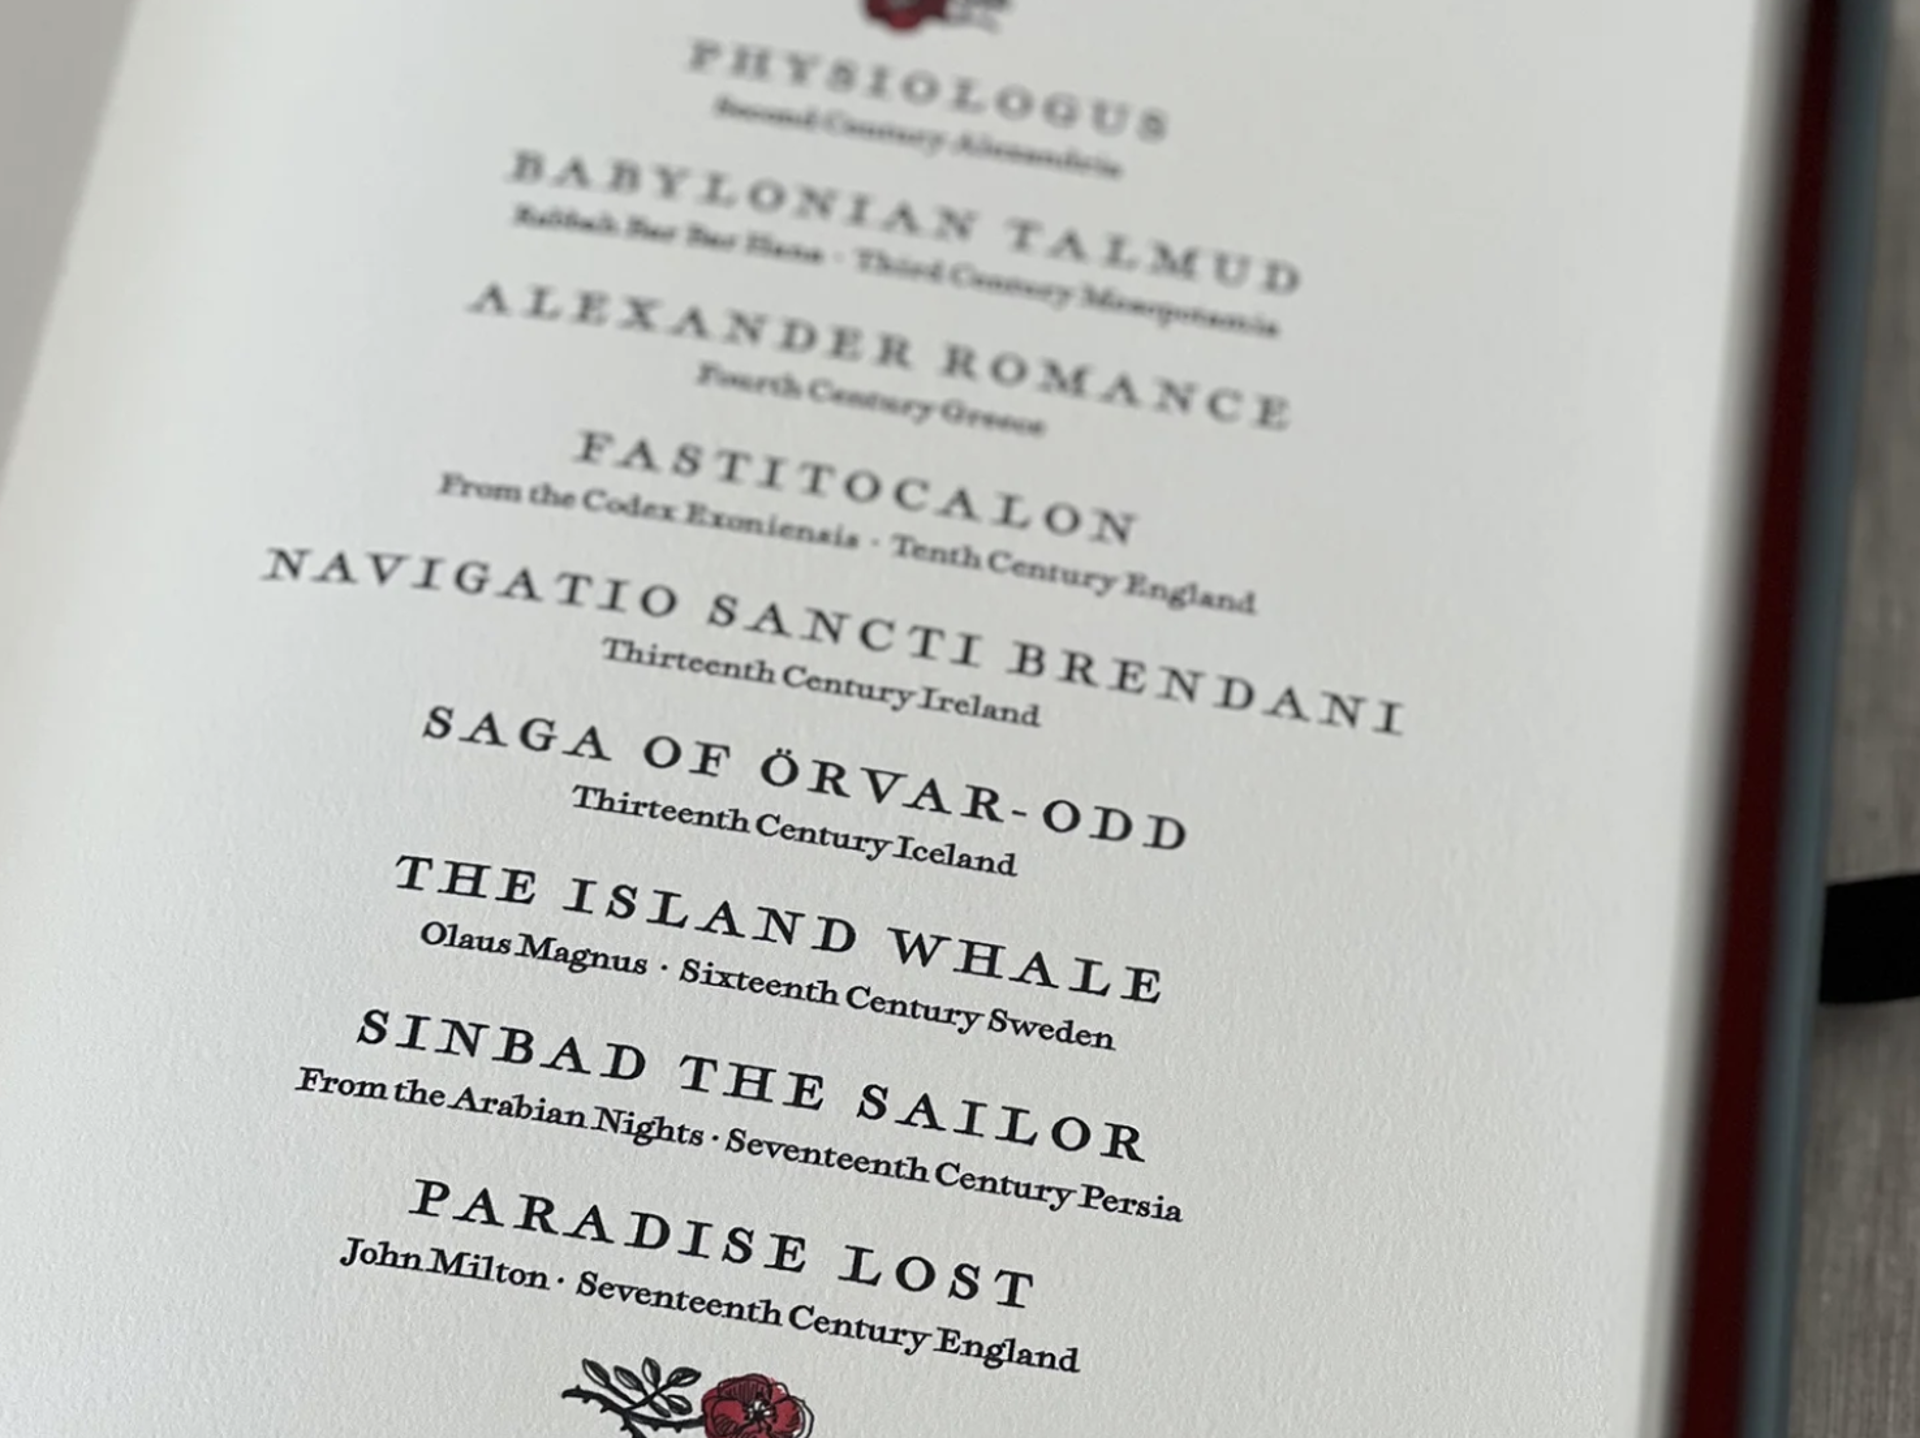 The Island Whale by Anneli Skaar